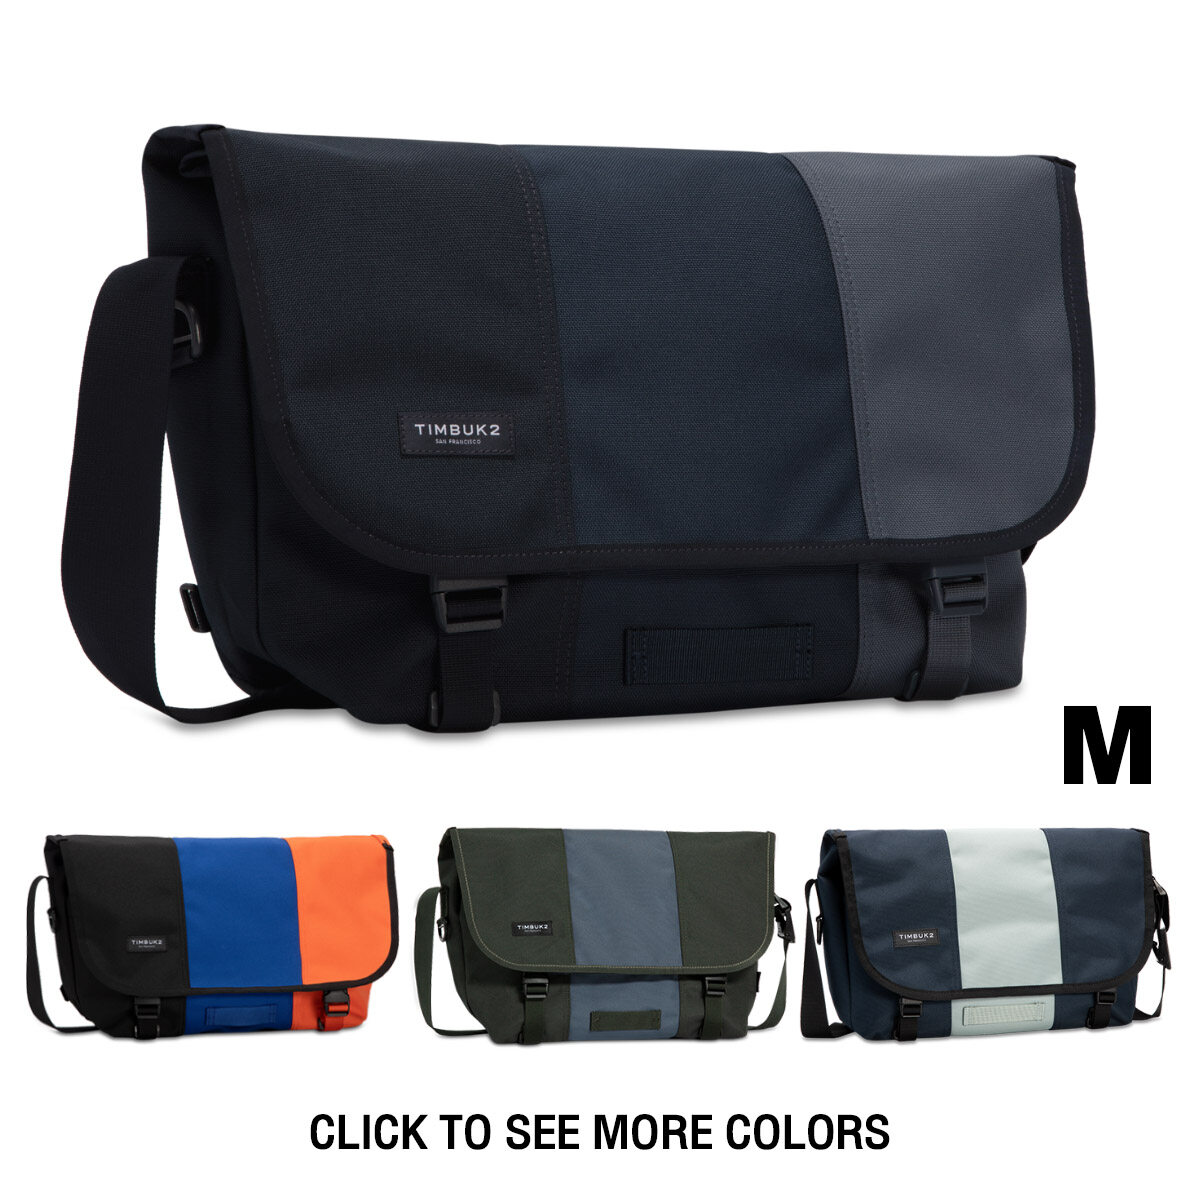 Timbuk2 กระเป๋าสะพายข้าง รุ่น Classic Messenger Bag - M (1108-4)